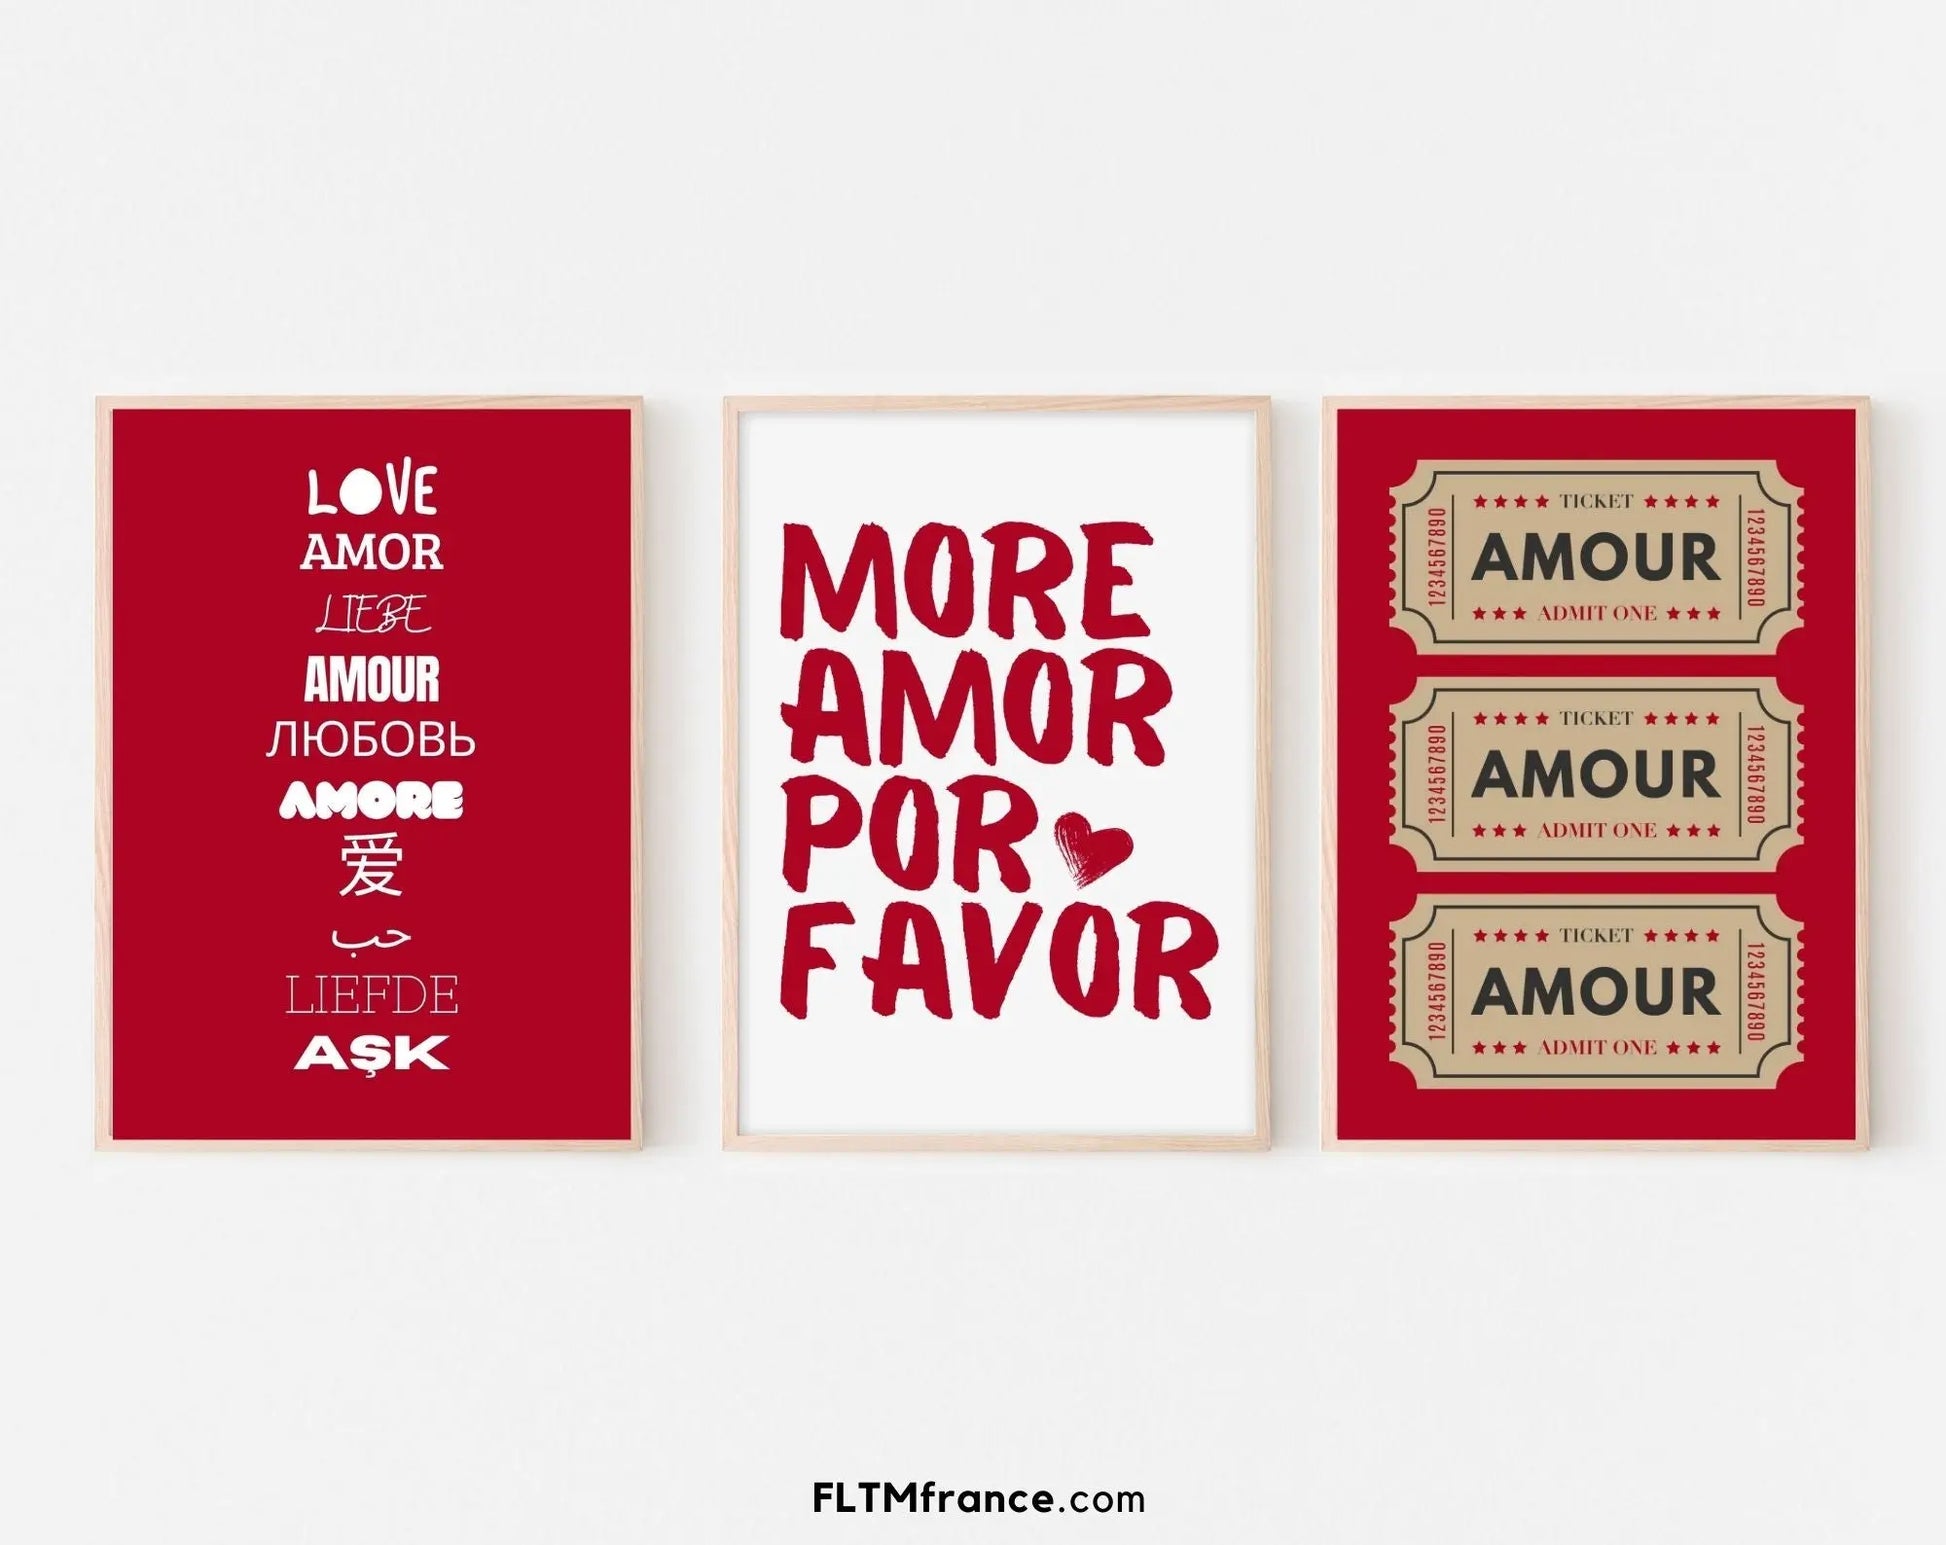 Ticket Mon amour - Affiche Saint-Valentin FLTMfrance